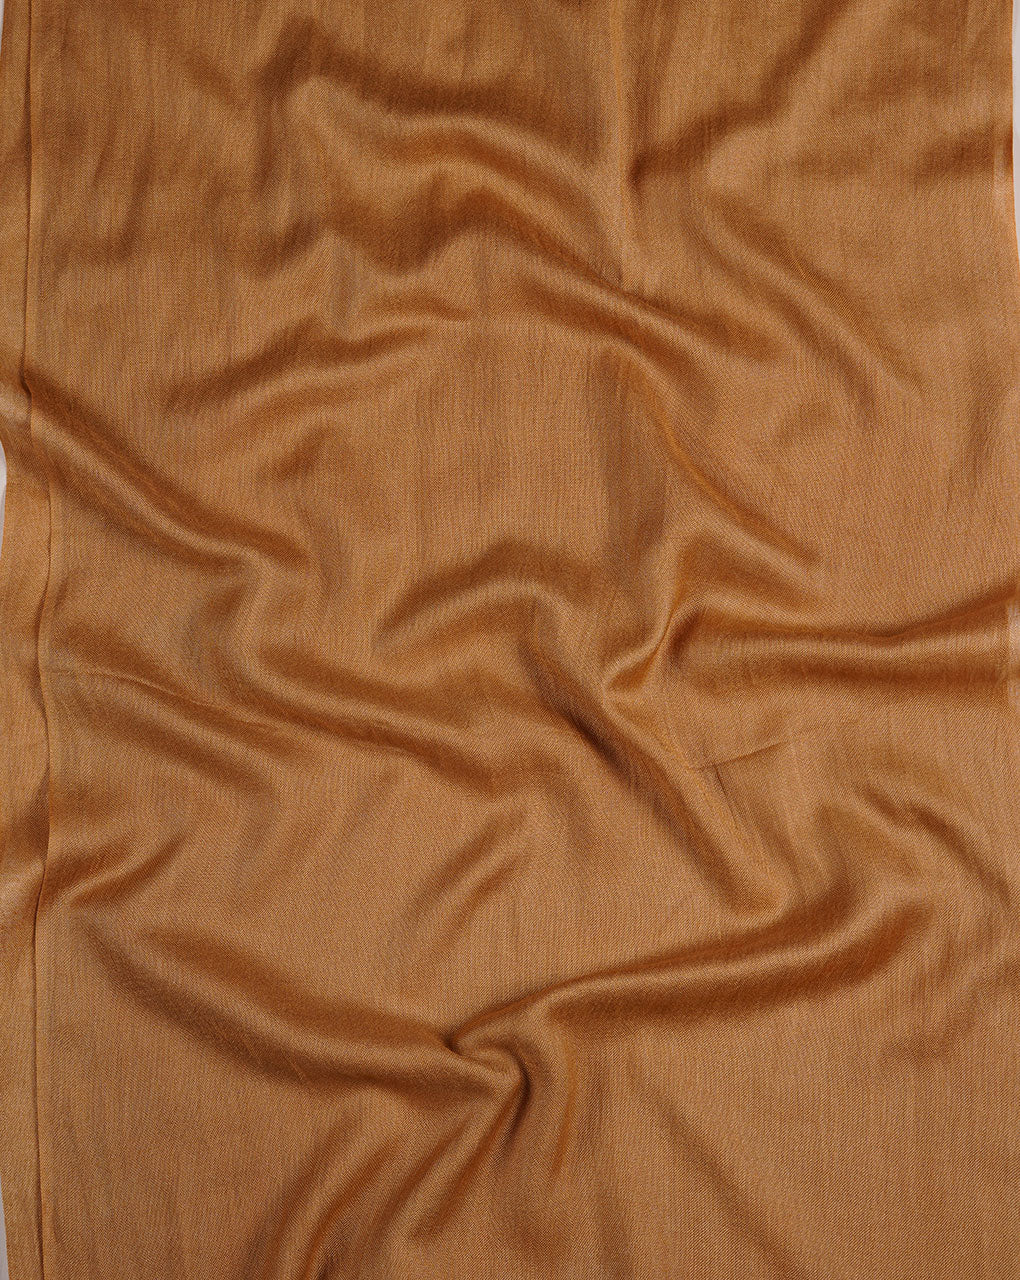 Brown Woven Bhagalpuri Viscose Stole - Fabriclore.com